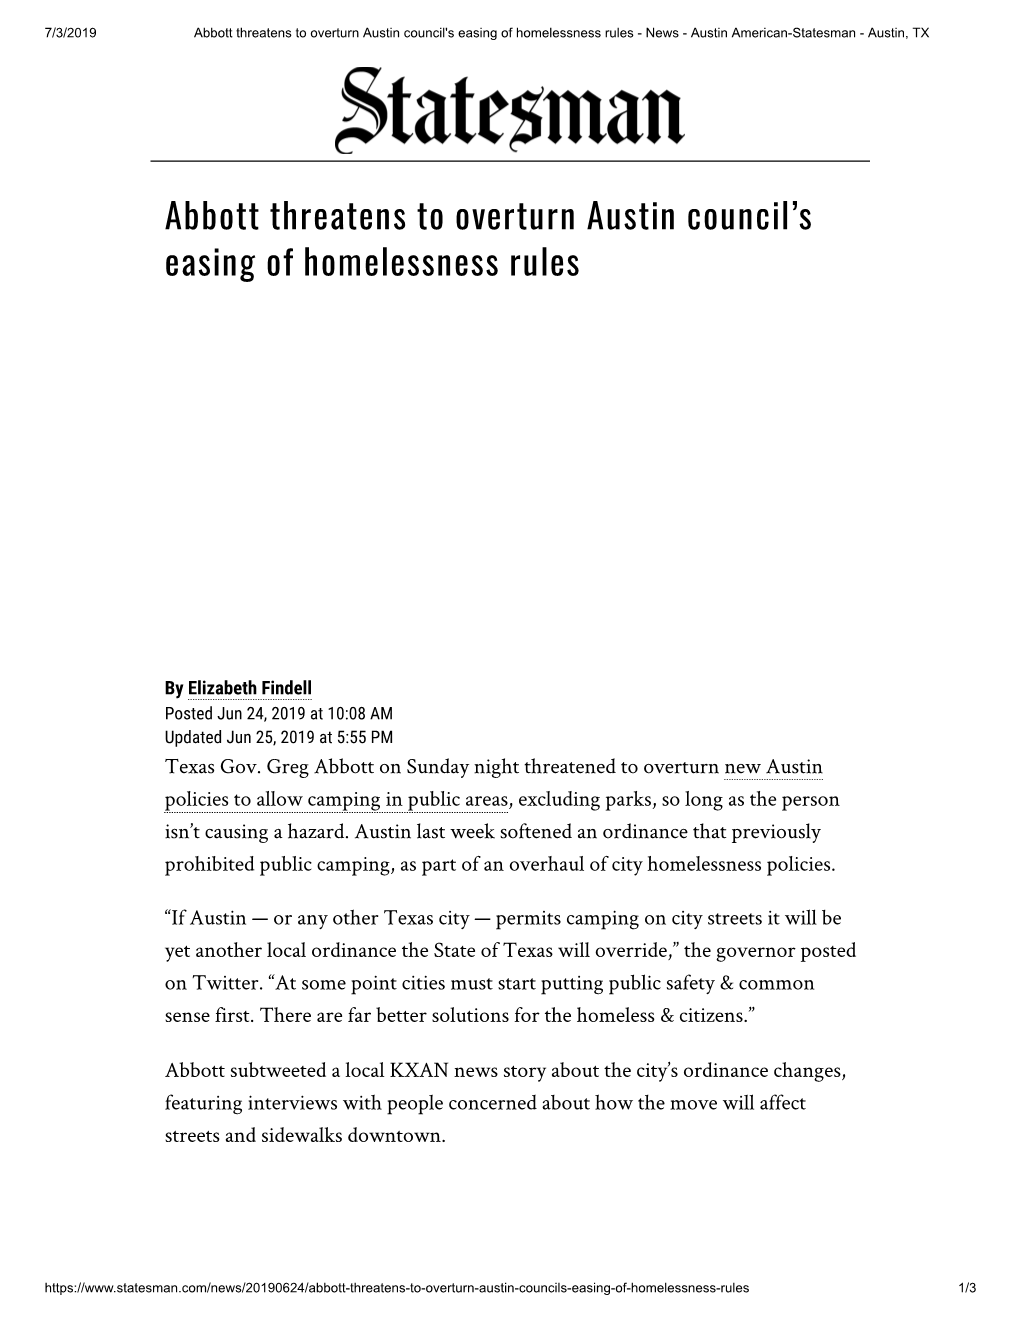 Abbott Threatens to Overturn Austin Council's Easing of Homelessness Rules - News - Austin American-Statesman - Austin, TX